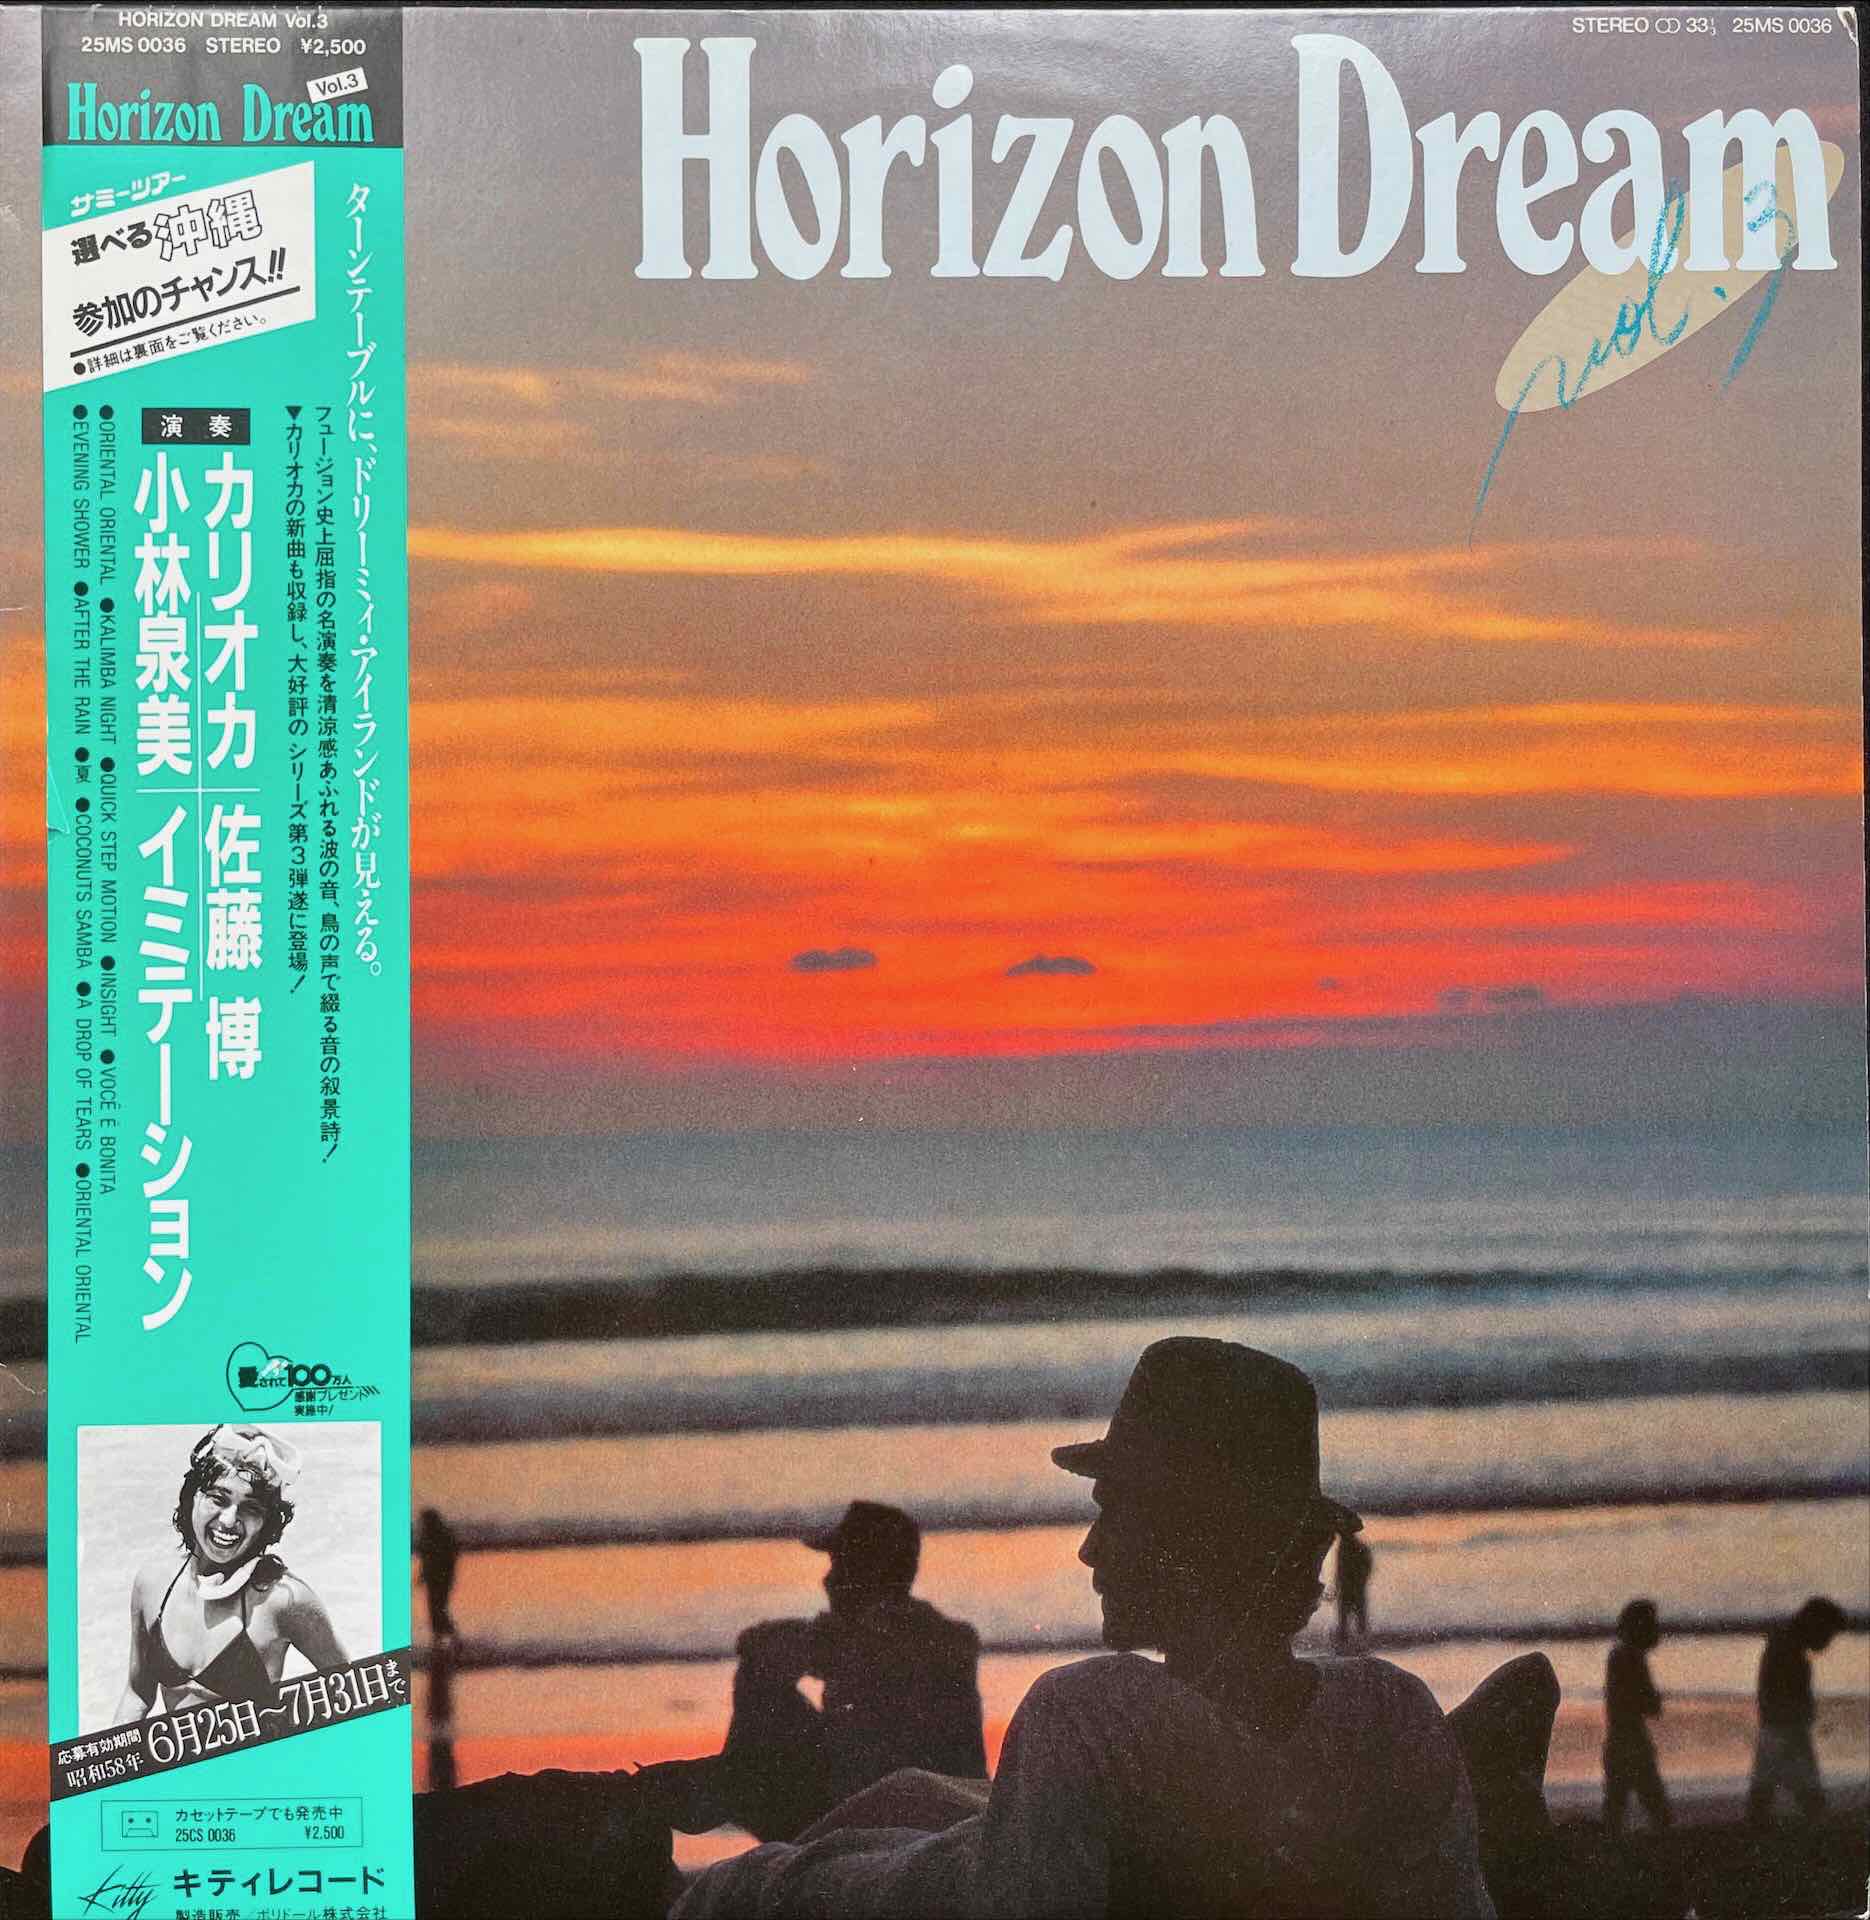 Various – Horizon Dream Vol. 3 LP sleeve image front